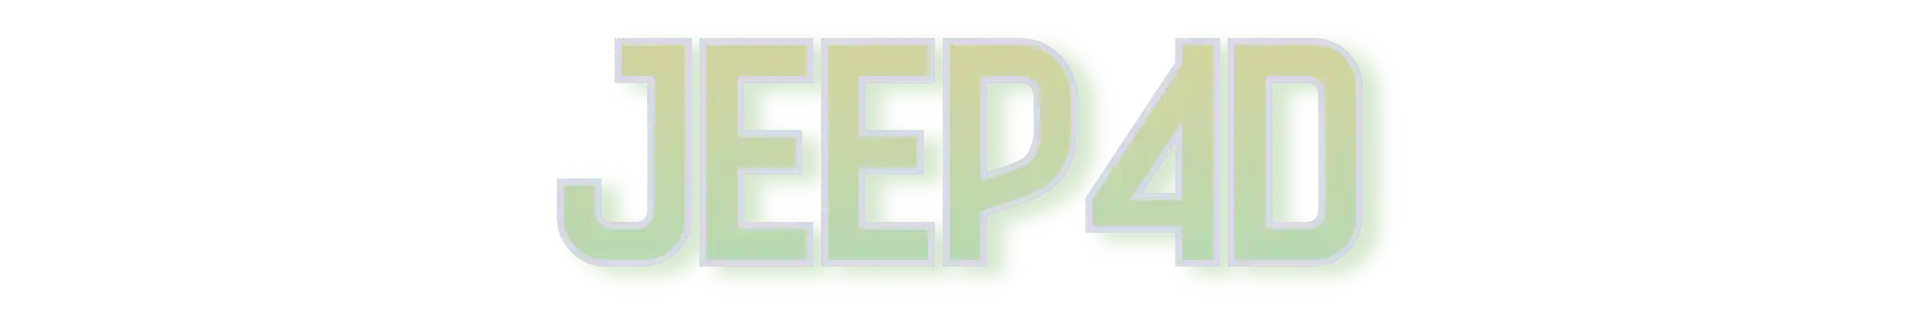 Jeep4D